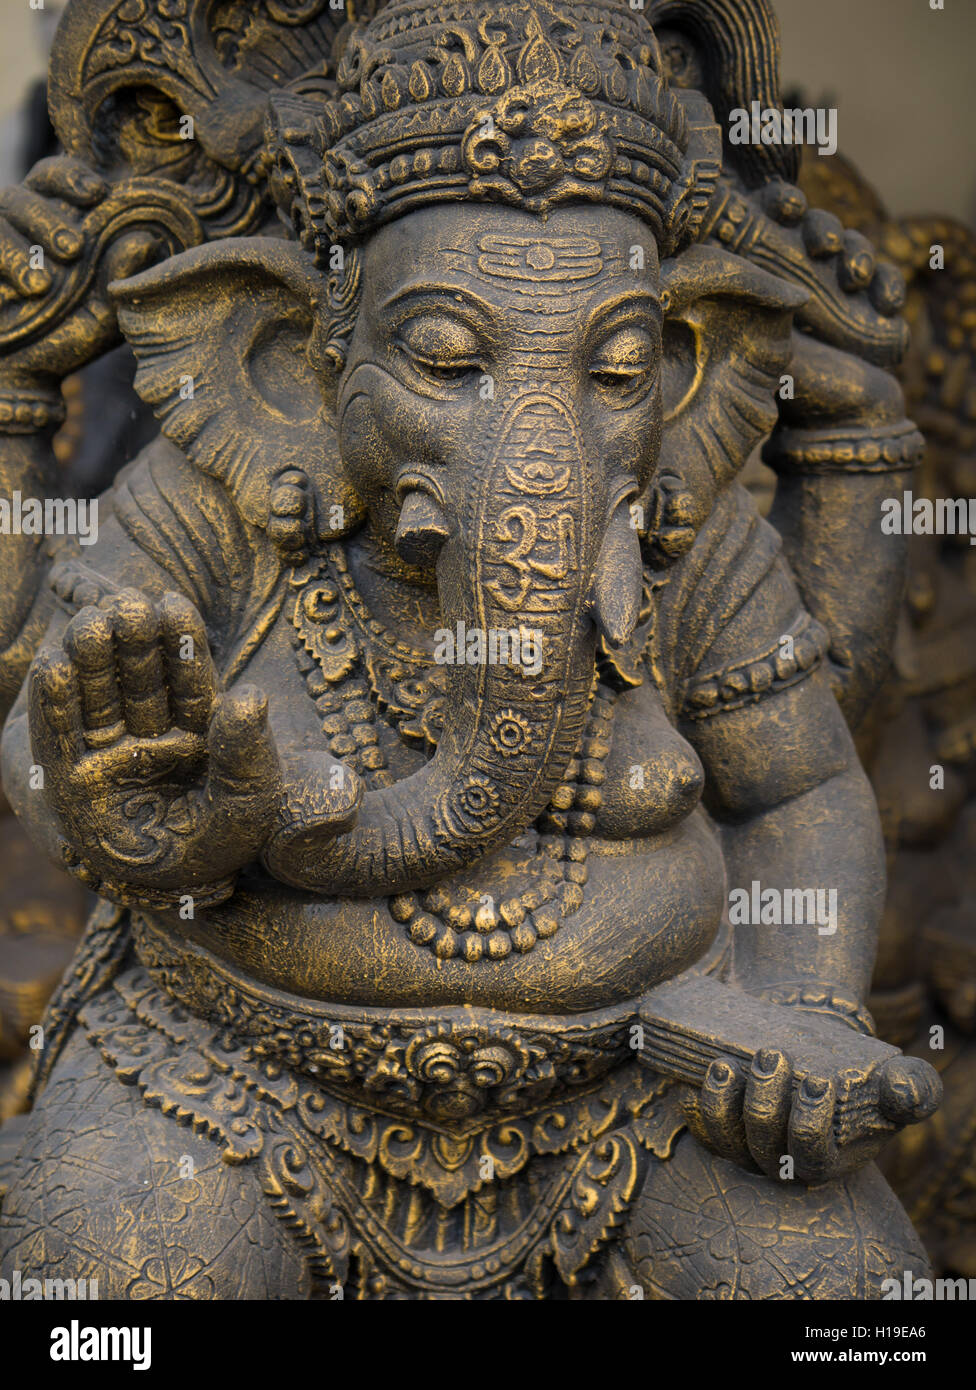 A statue of ganesha in bali, indonesia Stock Photo - Alamy